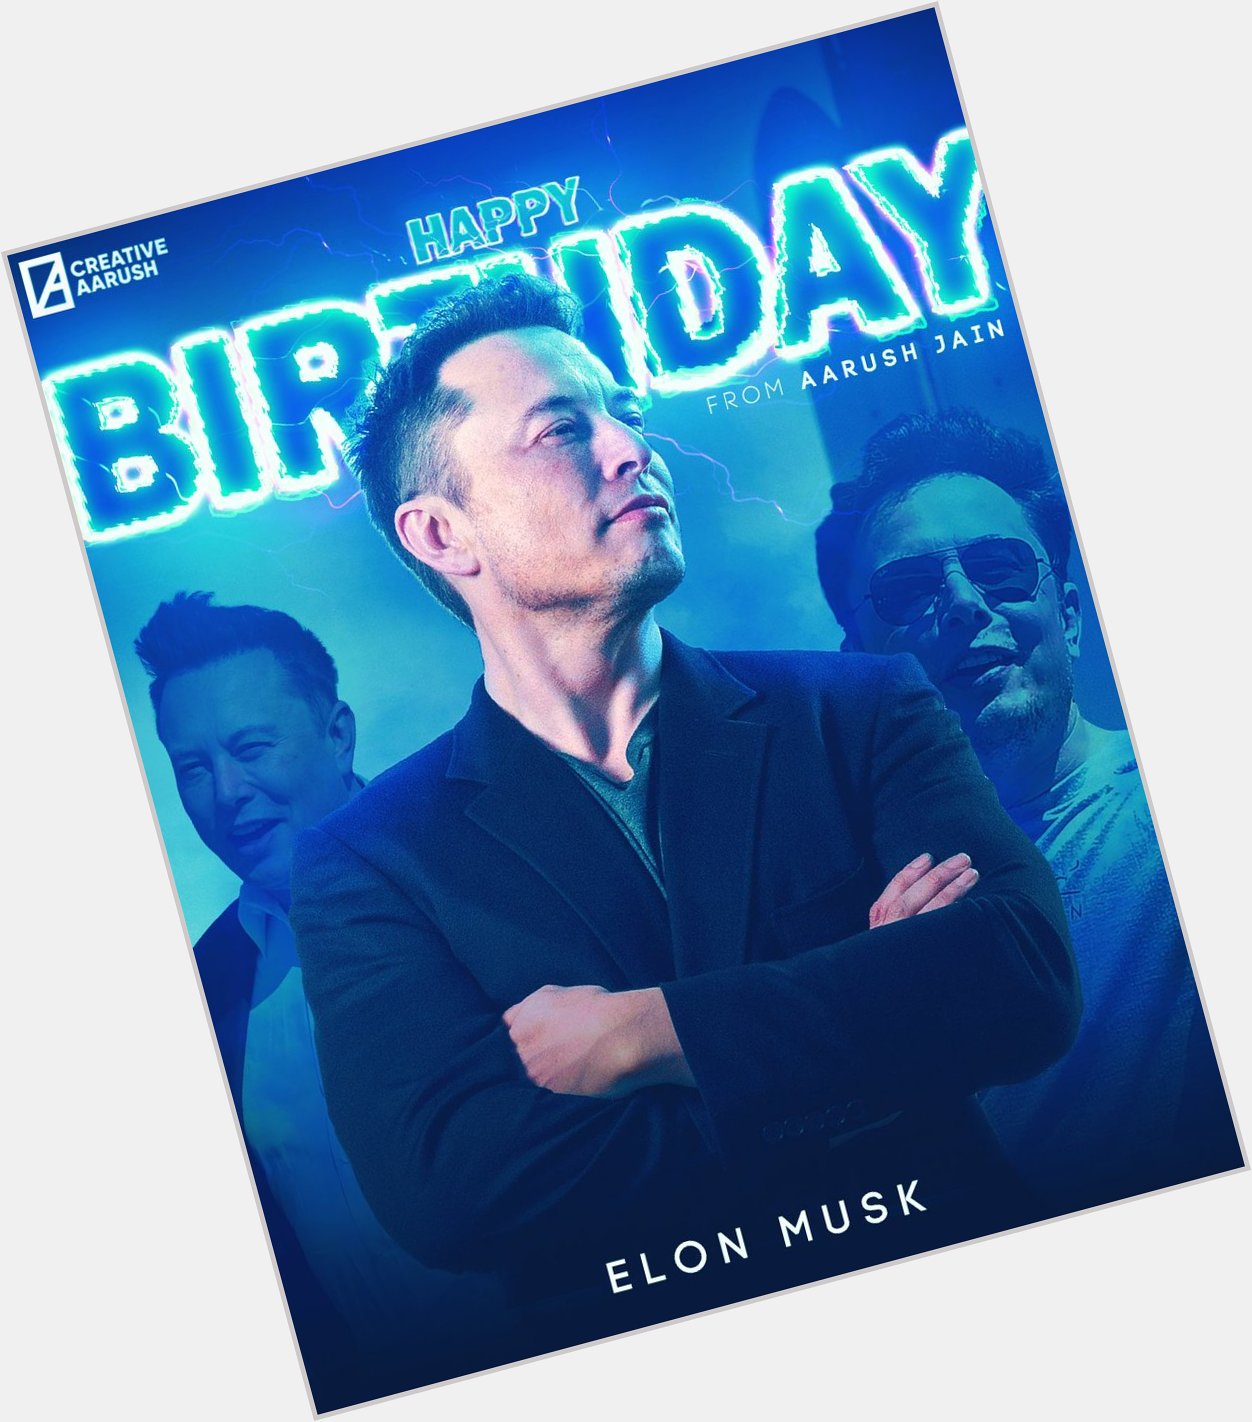 Happy birthday. Elon musk = innovation    